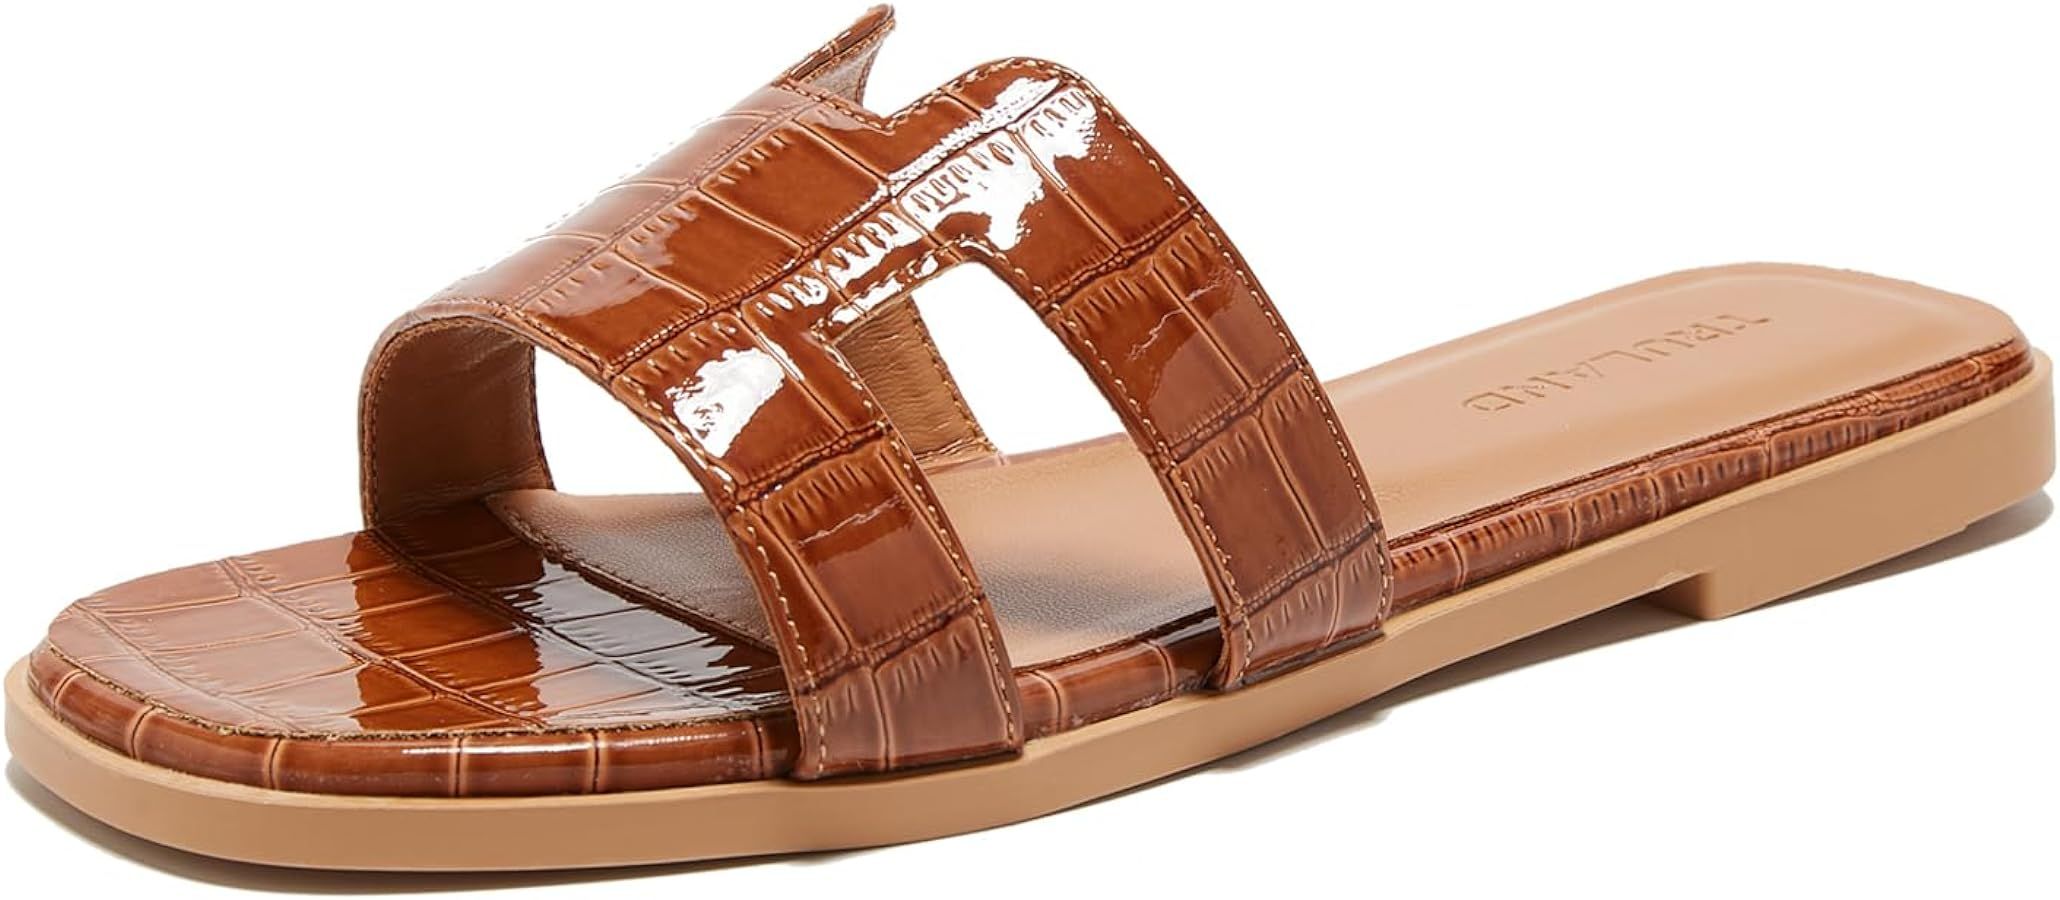 TRULAND H Strap Flat Slide Sandals for Women - Cute Fashion Open Toe Summer Dressy Sandals | Amazon (US)